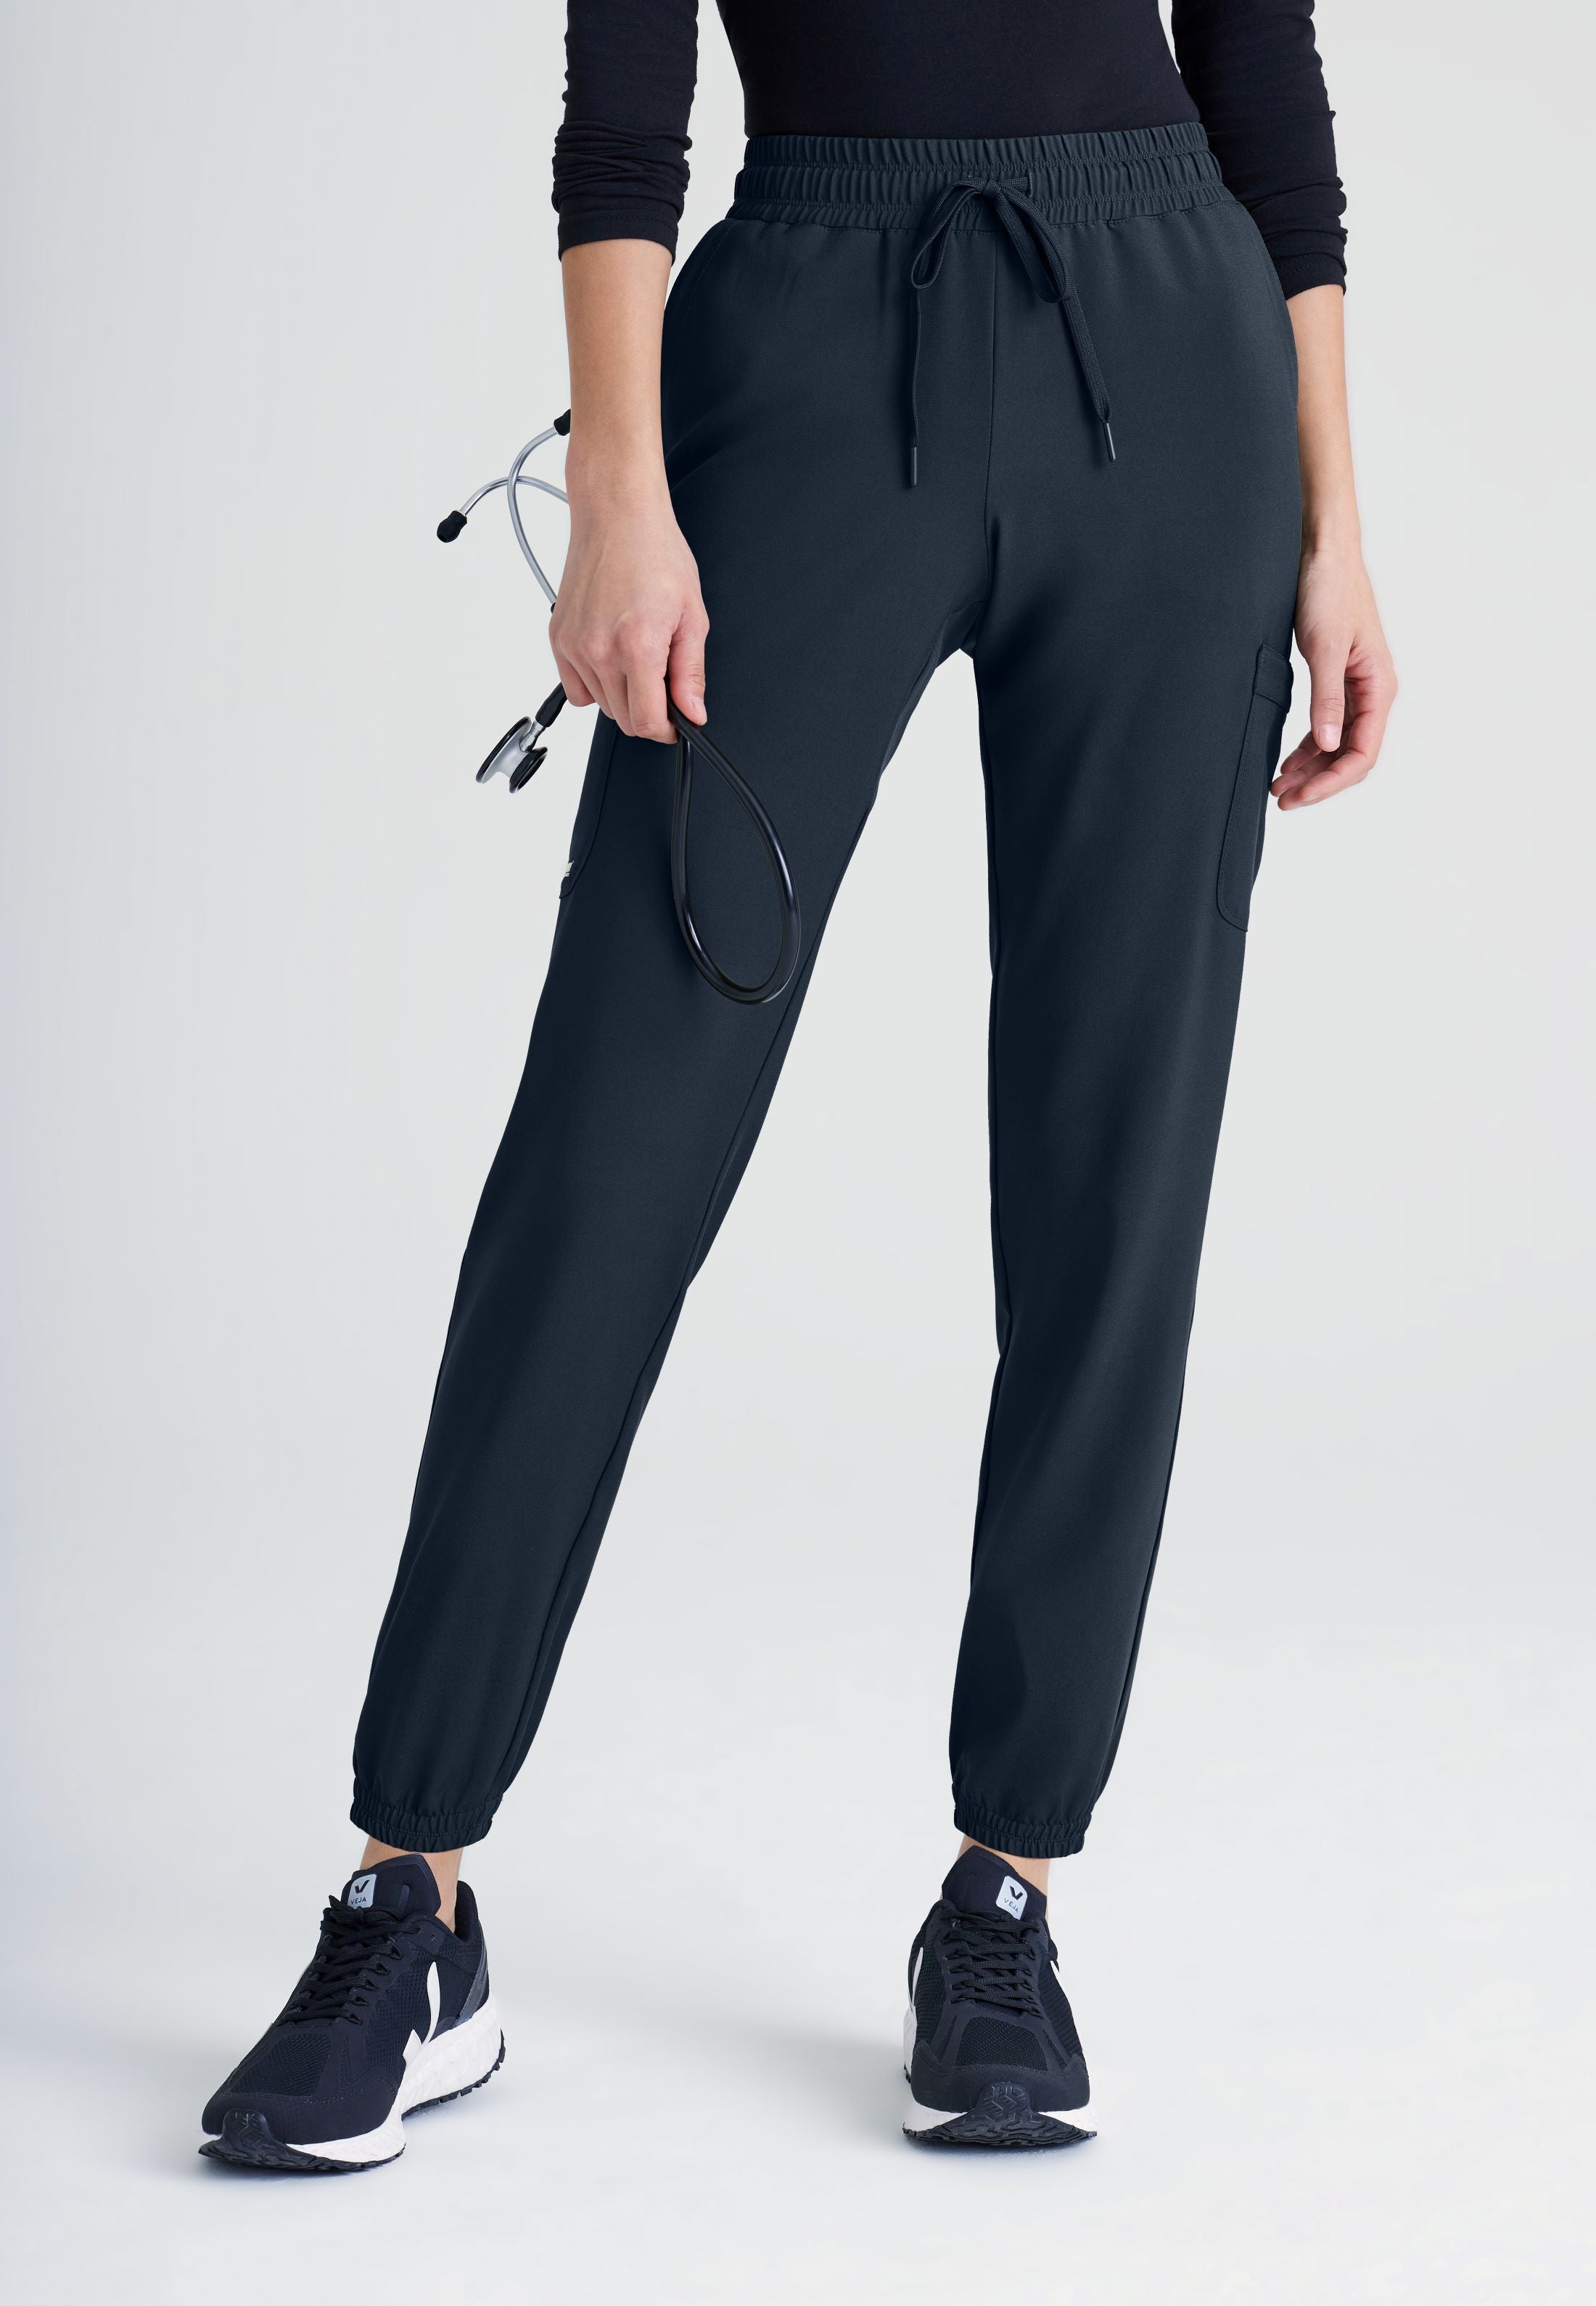 Buy Zeston Six Pocket Denim Cargo Pants for Women (26, Dark Blue) at  Amazon.in